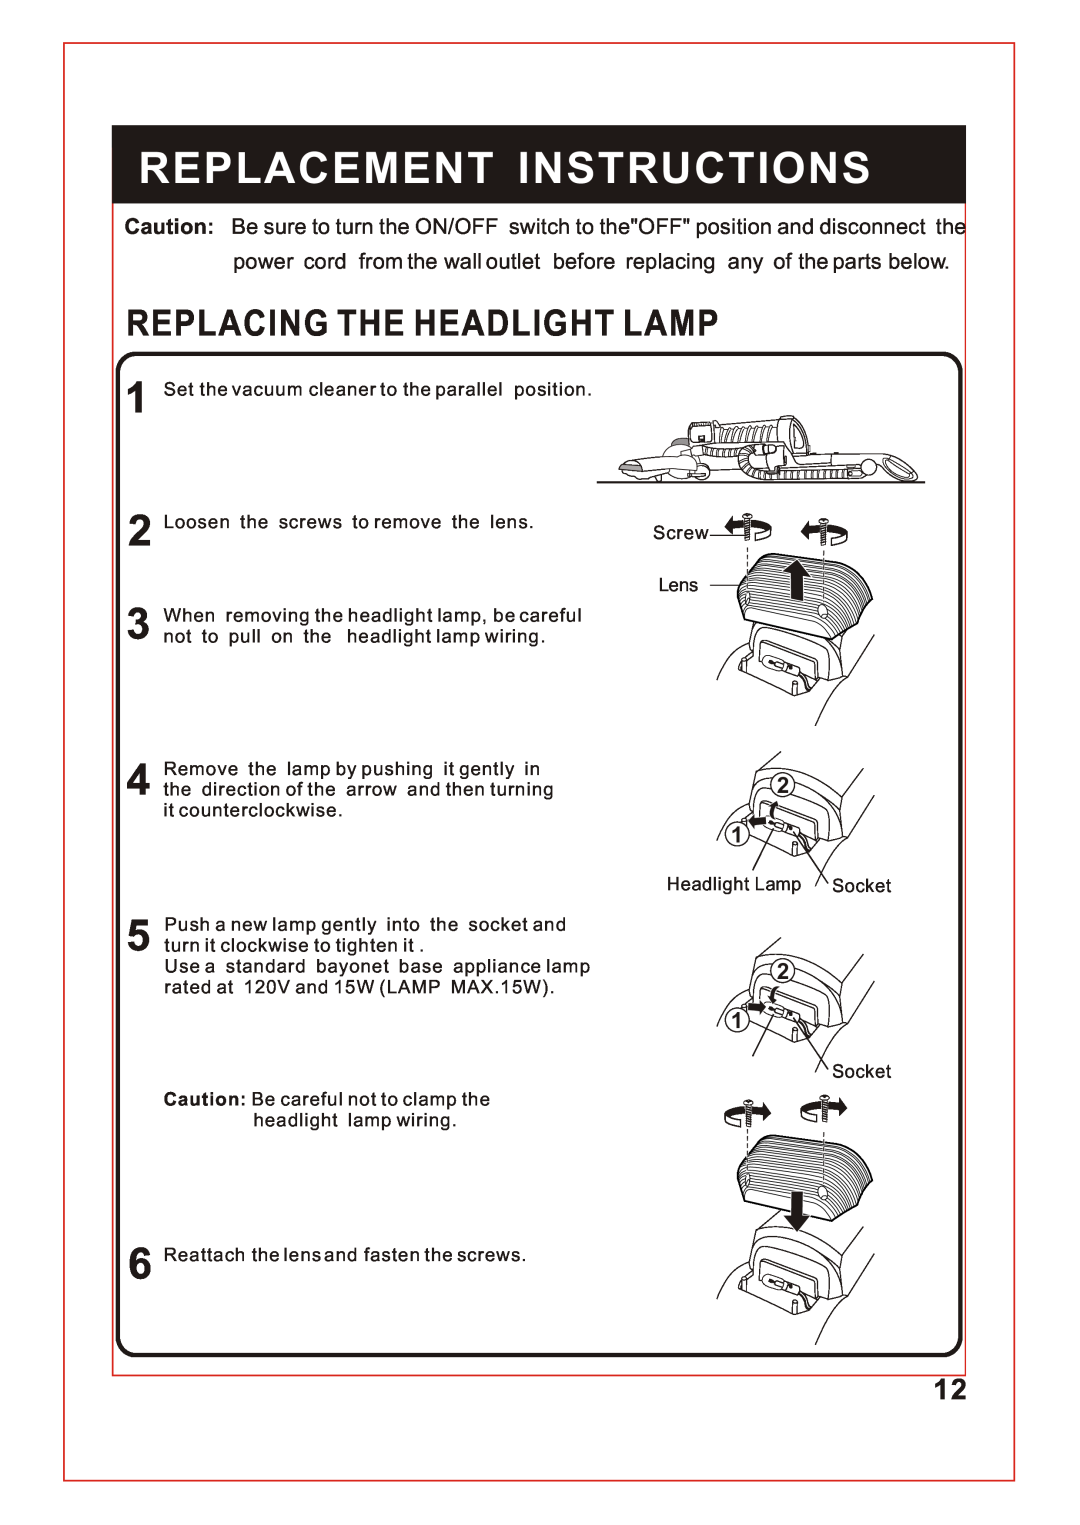 Fantom Vacuum FM741 instruction manual Replacement Instructions, Replacing The Headlight Lamp 